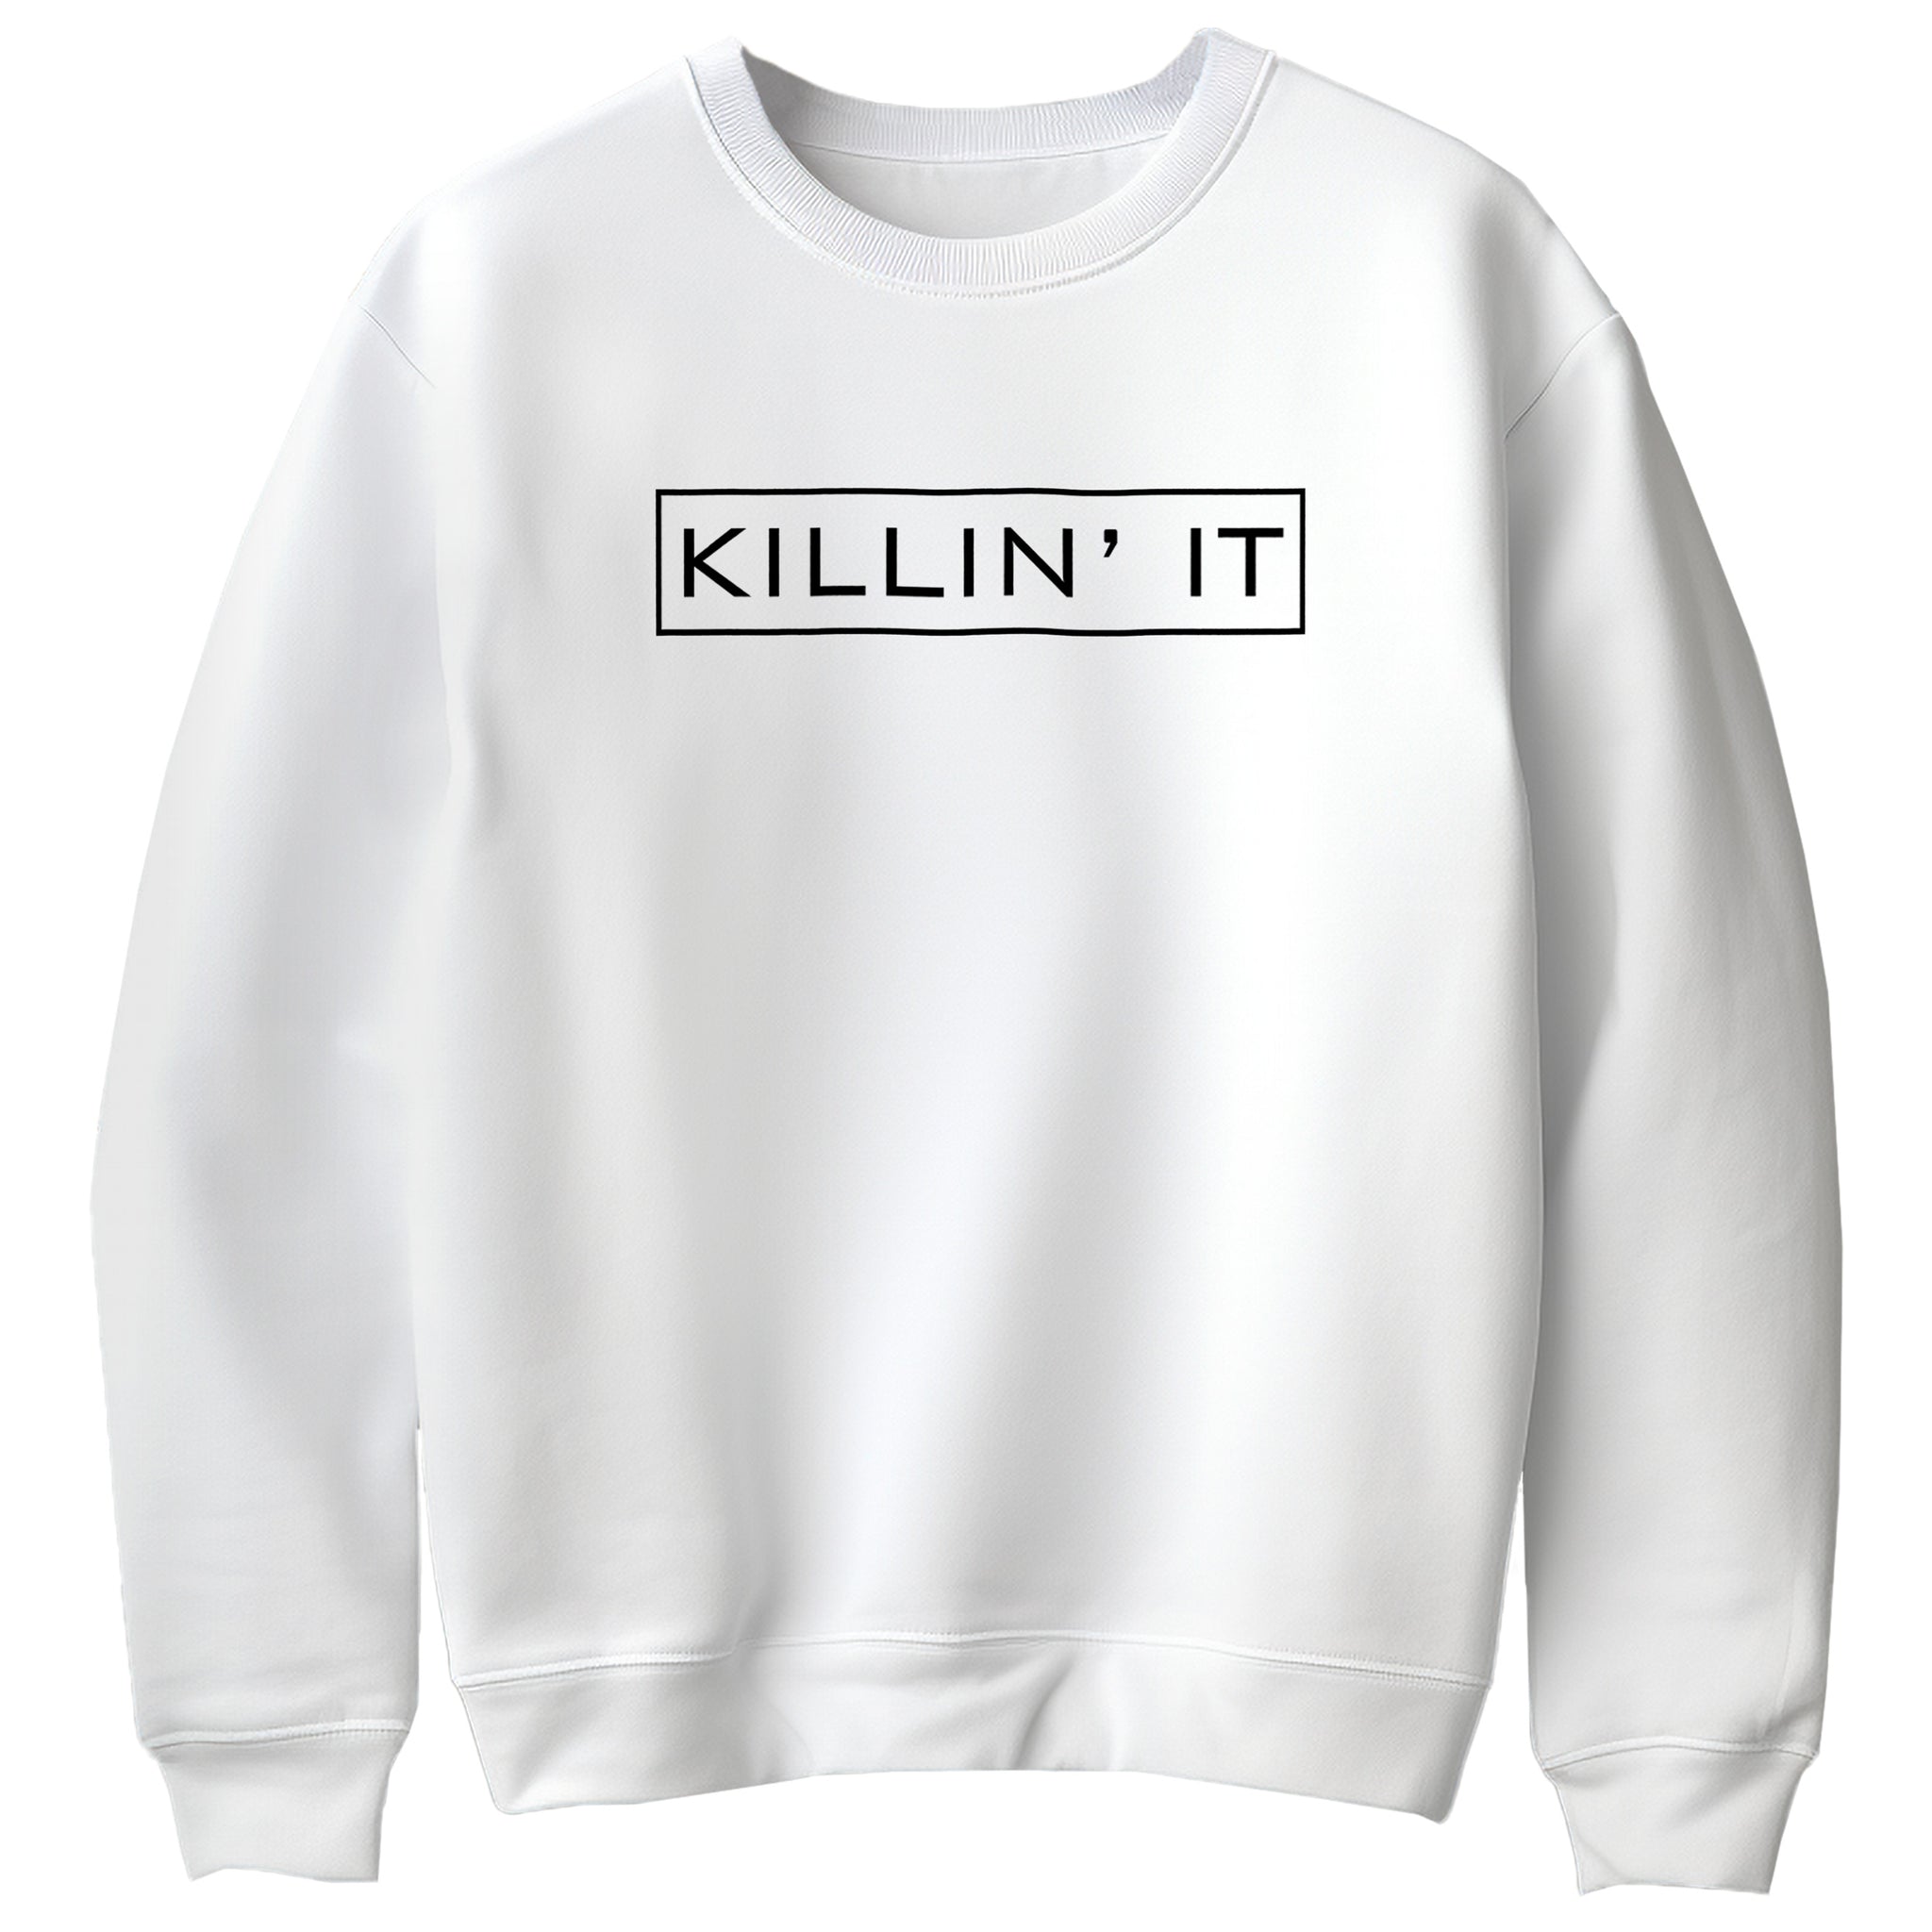 Killin' it Sweatshirt